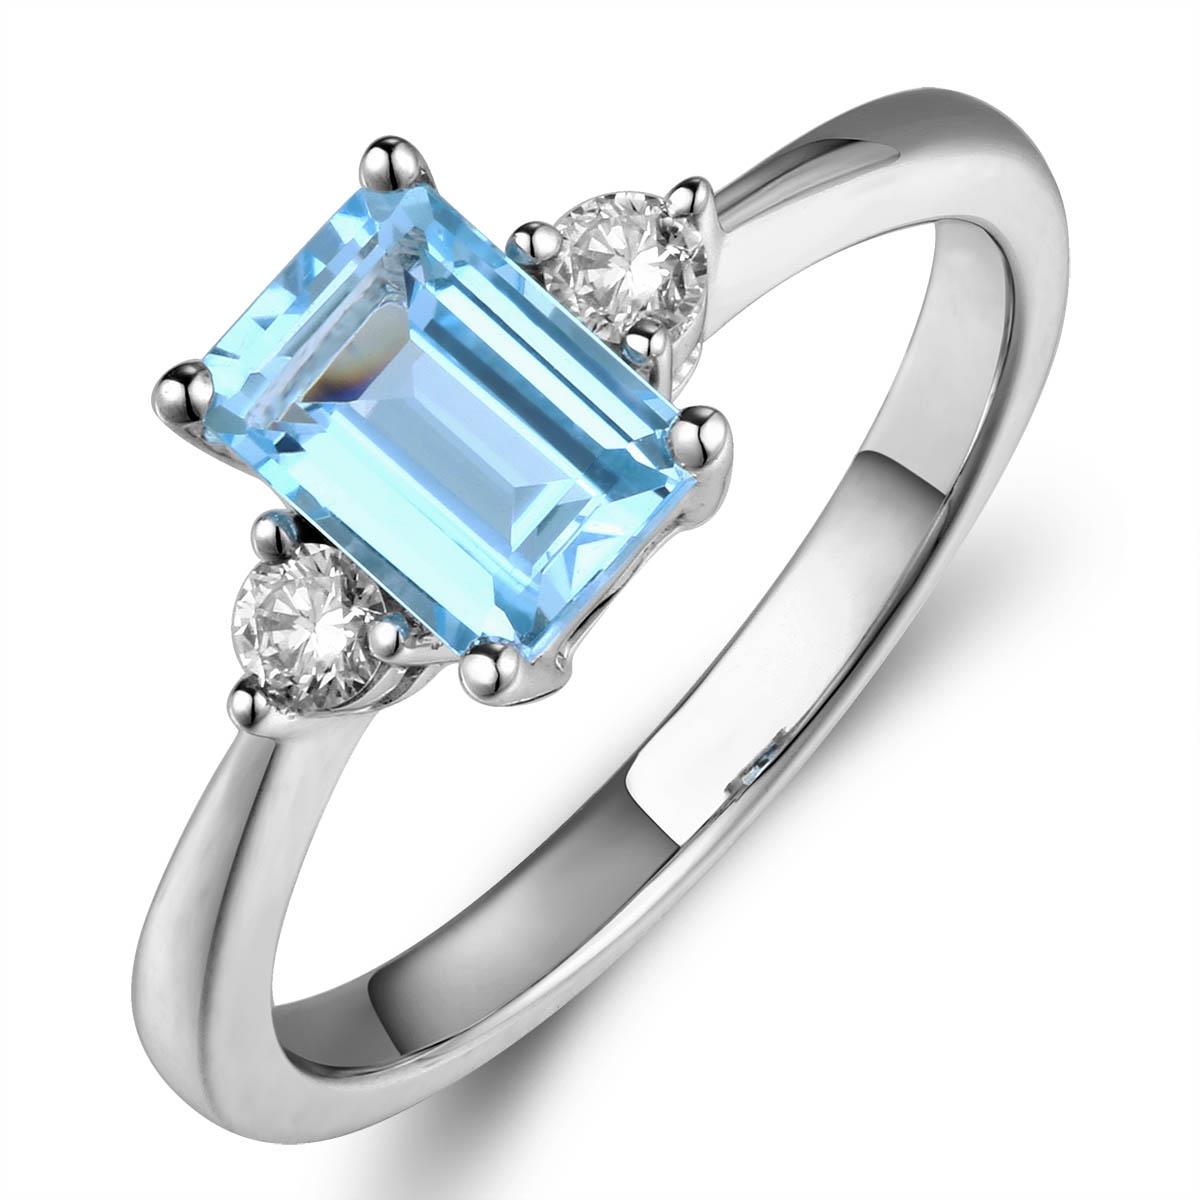 Aquamarine with Side Diamonds Ring